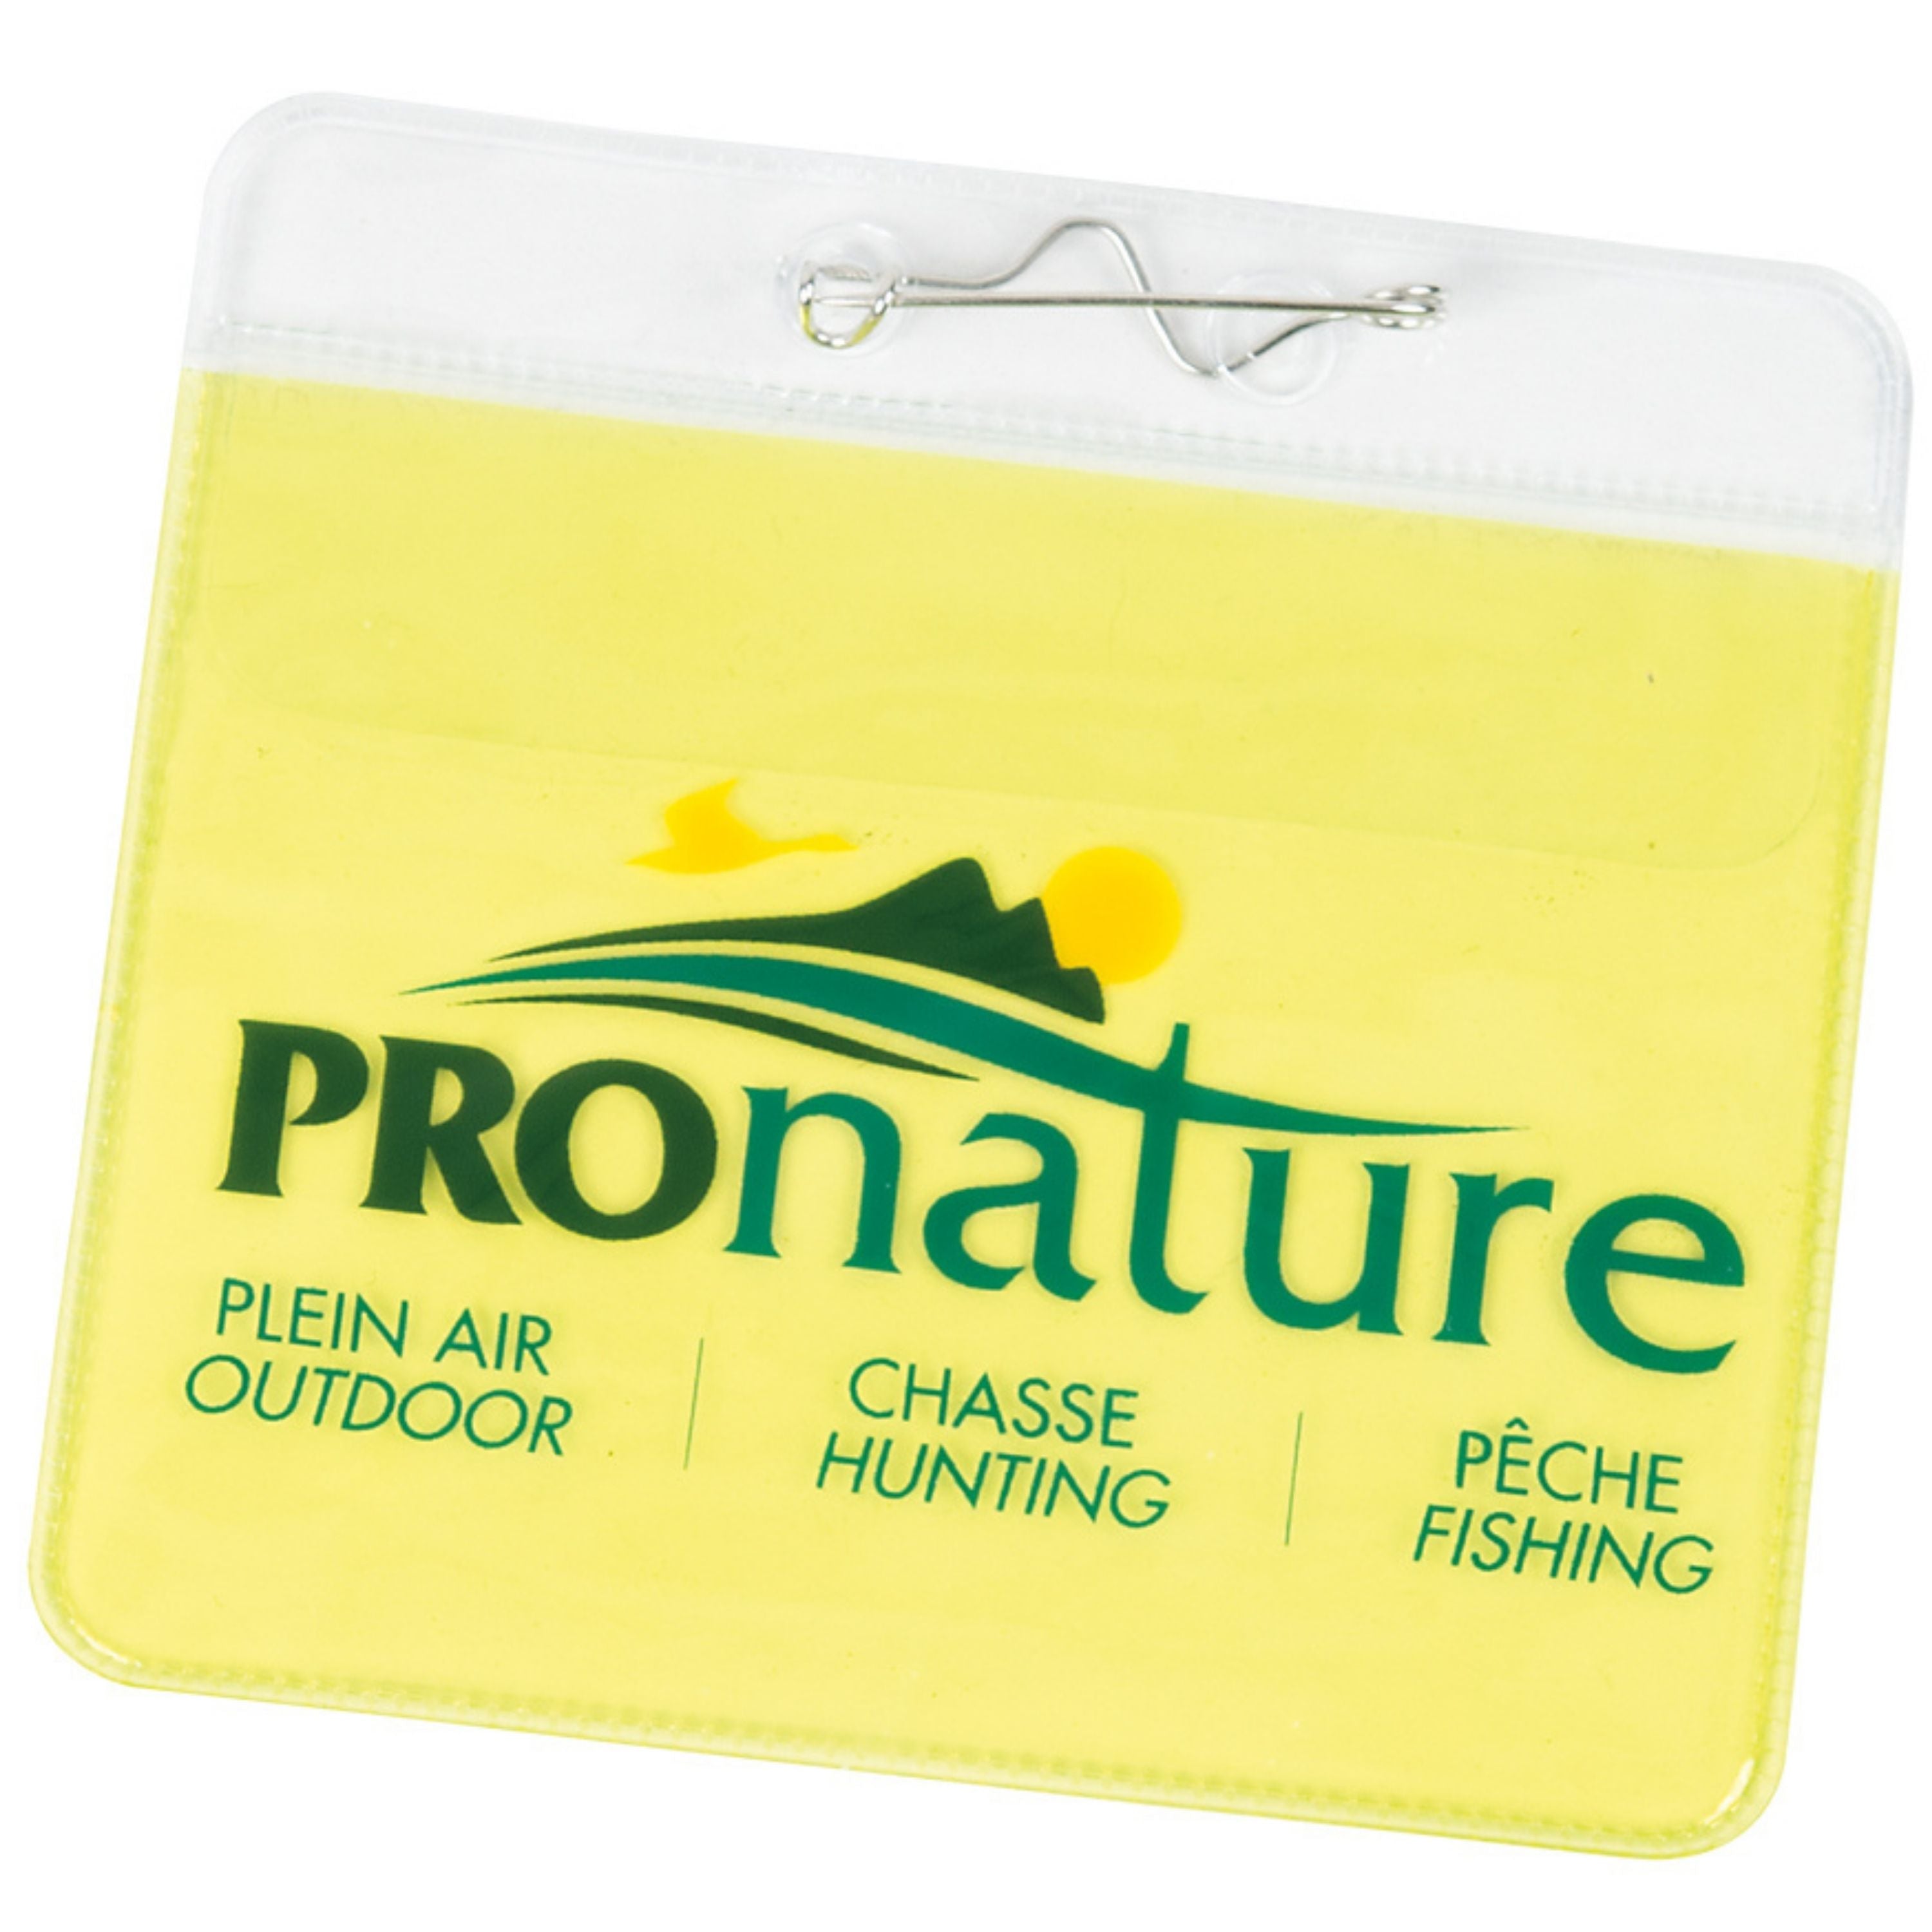 Porte-permis "Pronature"||"Pronature" Licence holder